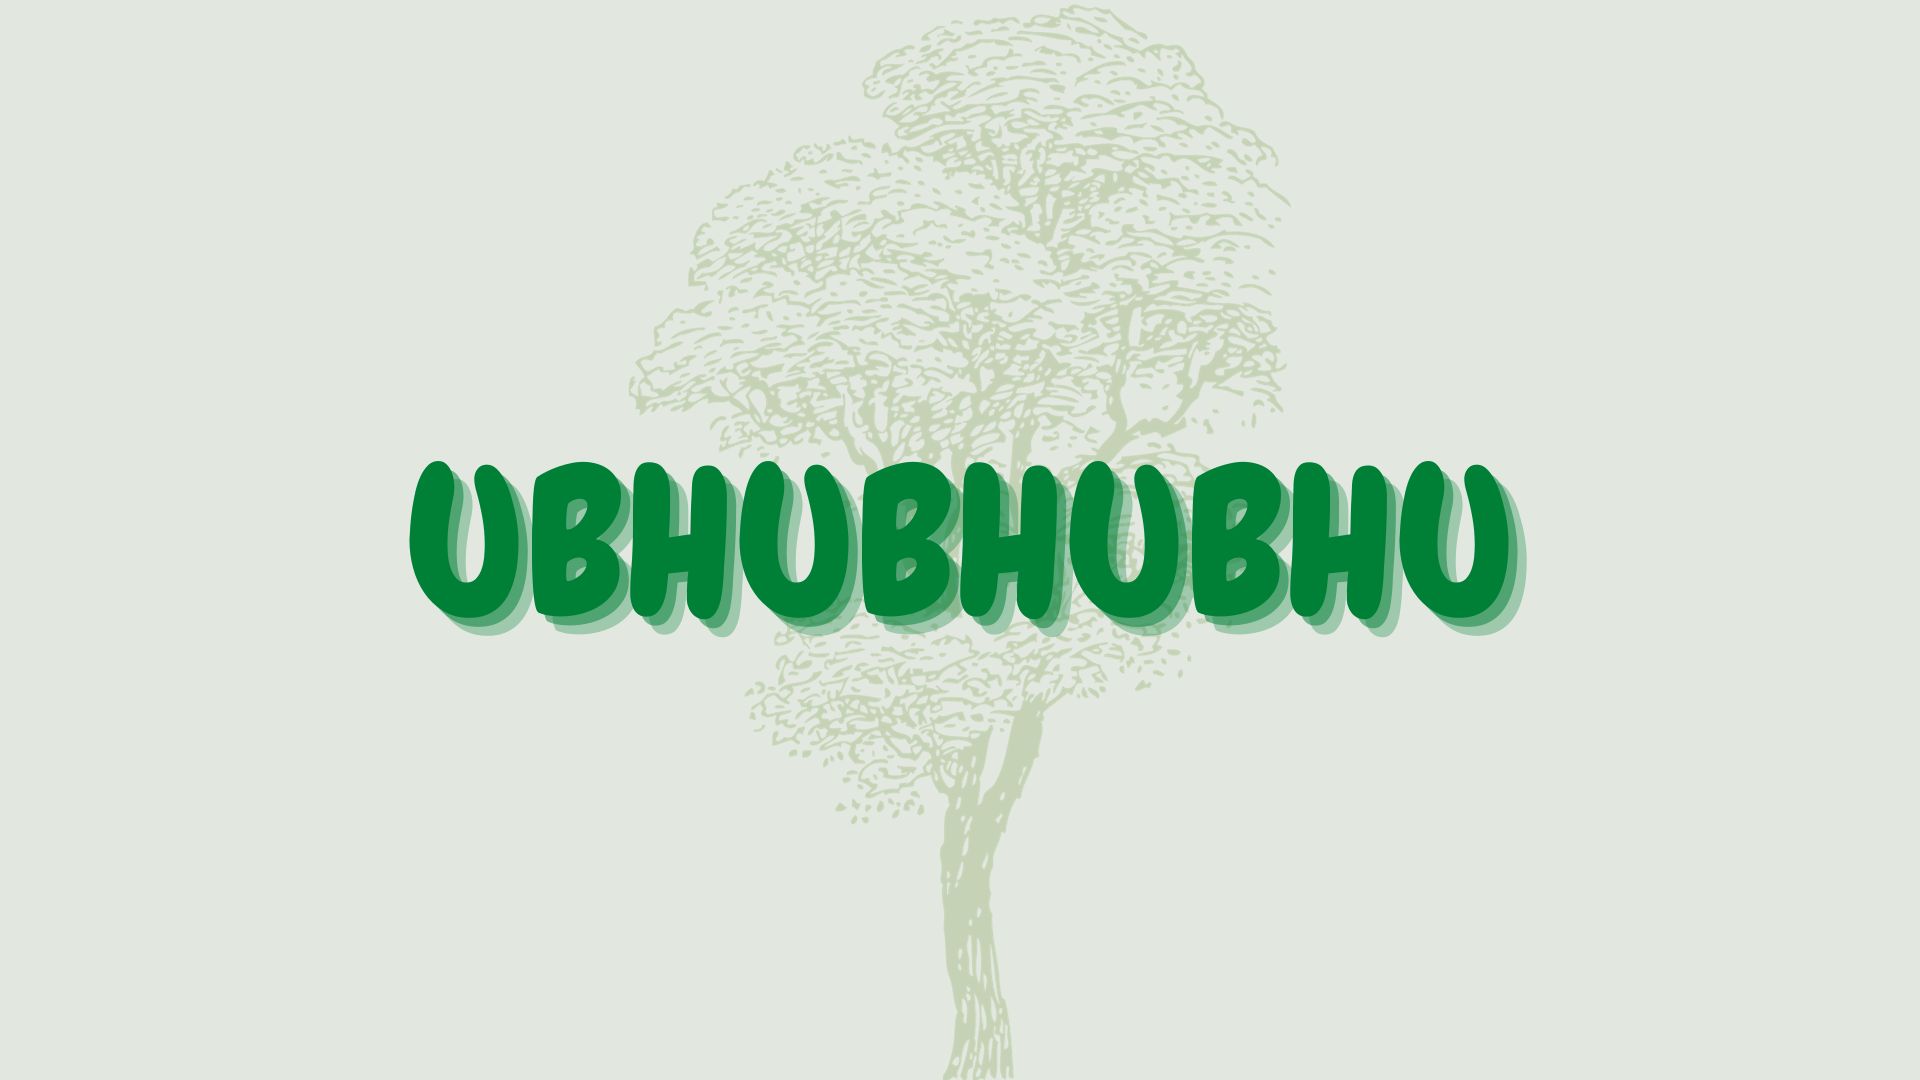 You are currently viewing uBhubhubhu